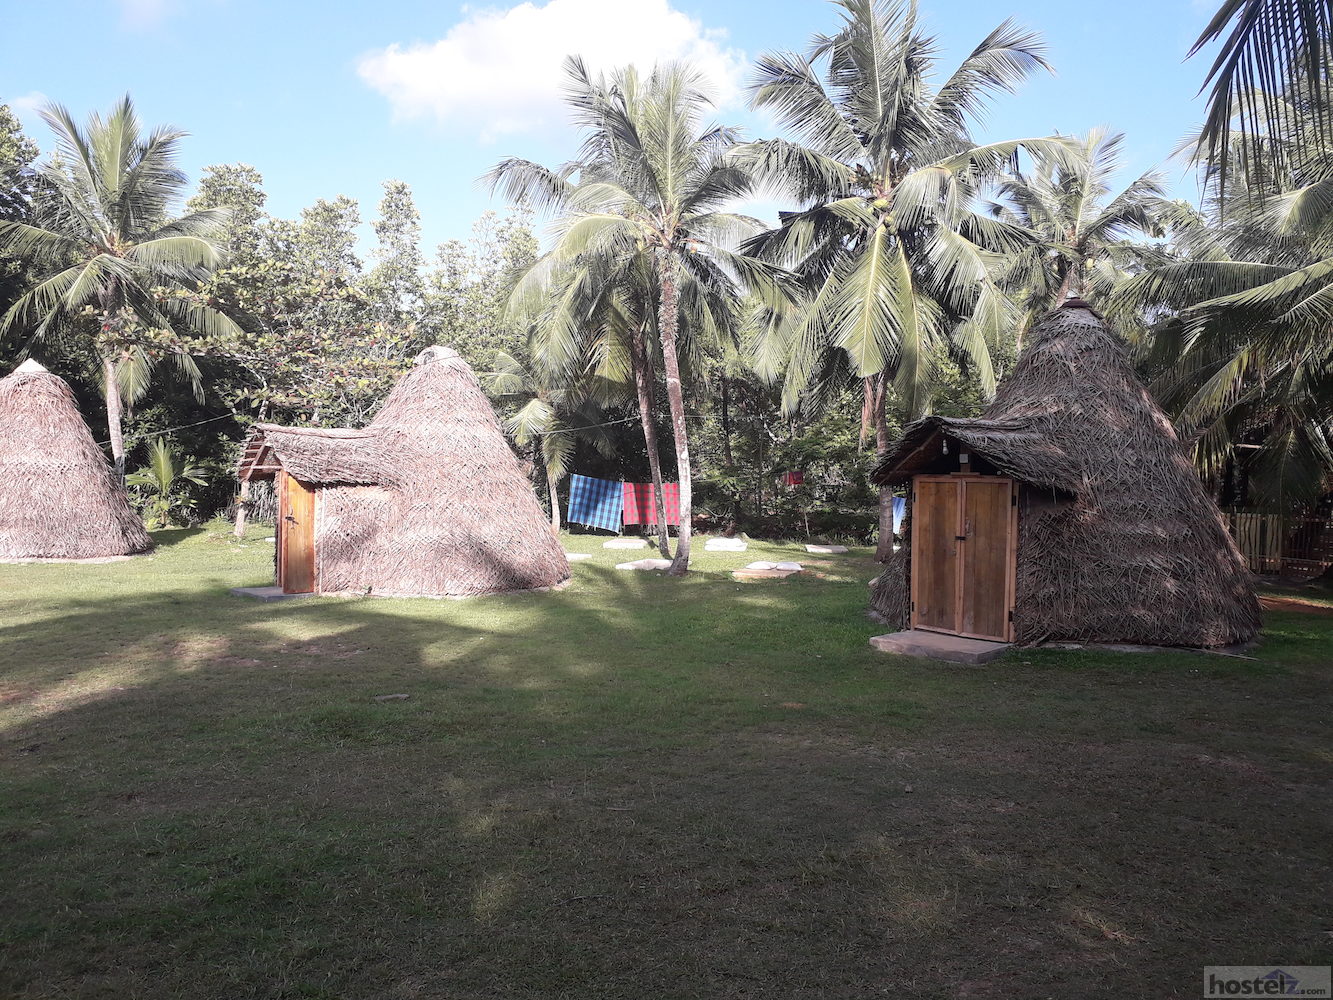 Camp Kush By Hostel, Unawatuna